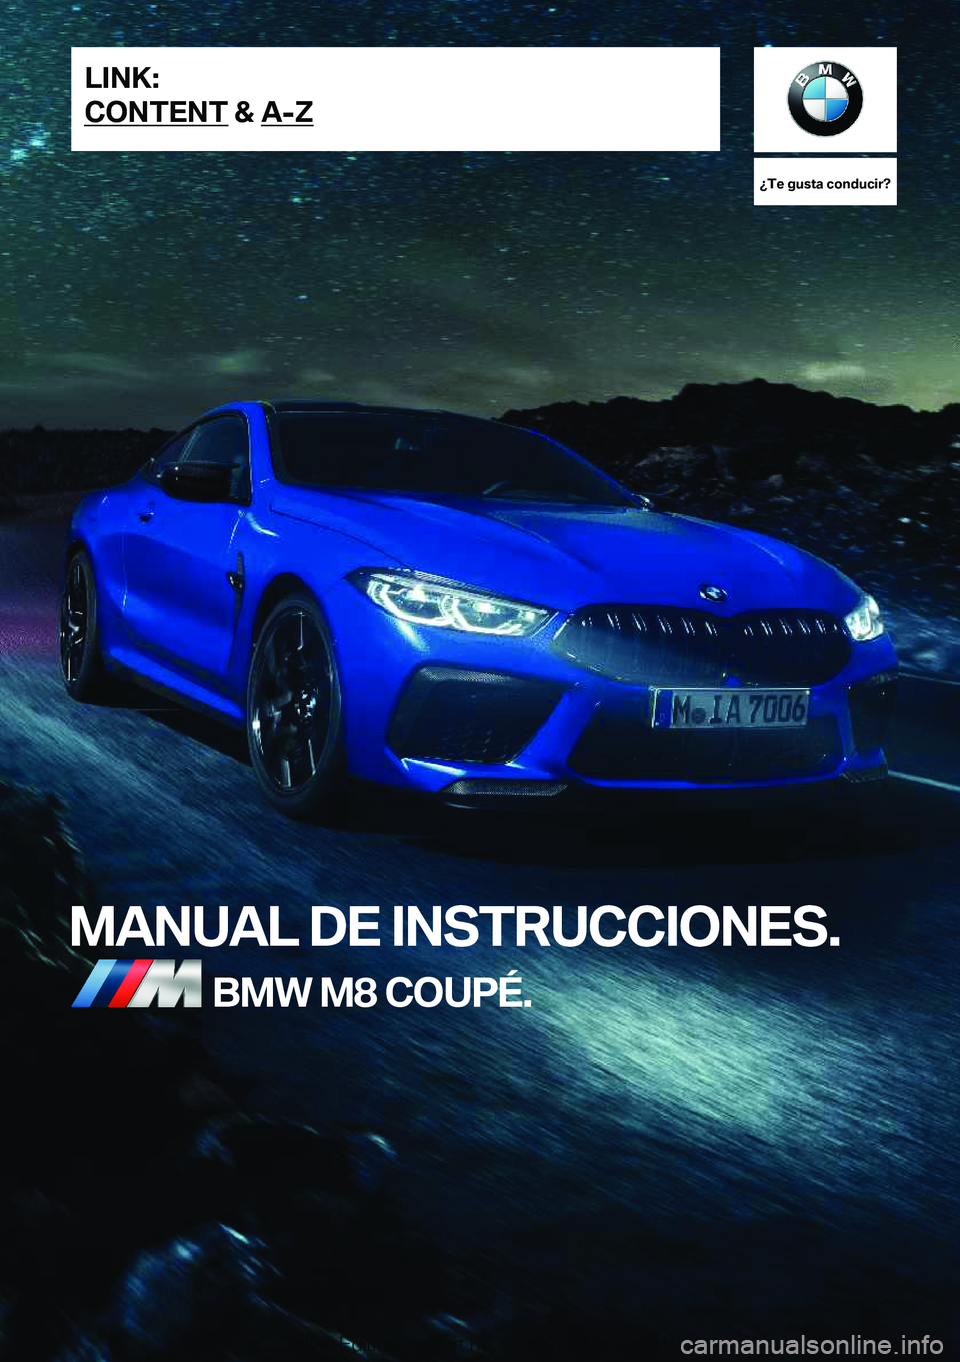 BMW M8 2020  Manuales de Empleo (in Spanish) ��T�e��g�u�s�t�a��c�o�n�d�u�c�i�r� 
�M�A�N�U�A�L��D�E��I�N�S�T�R�U�C�C�I�O�N�E�S�.�B�M�W��M�8��C�O�U�P�